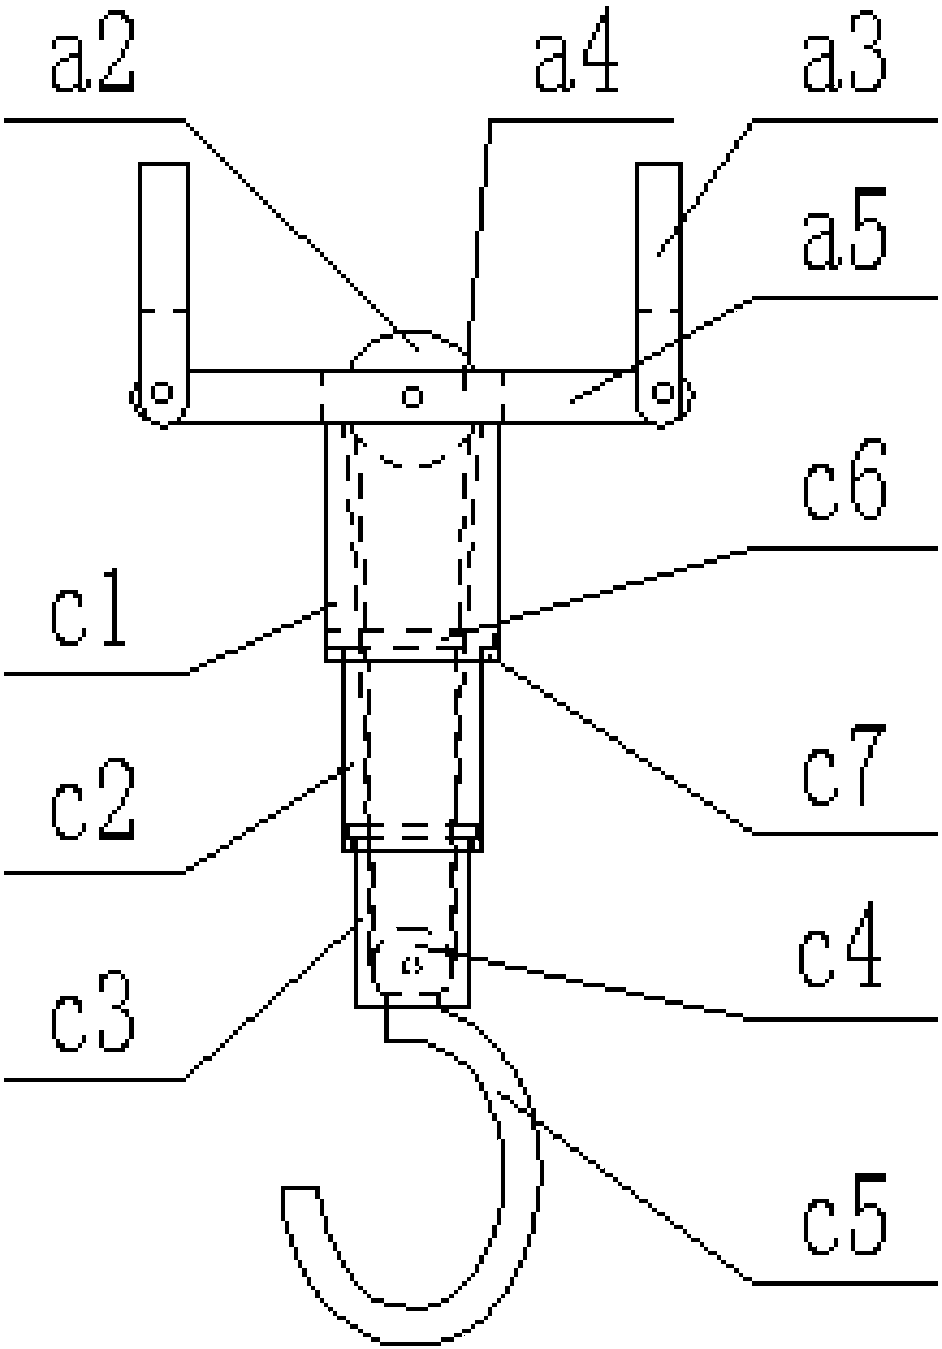 Frame assembly hoisting mechanism